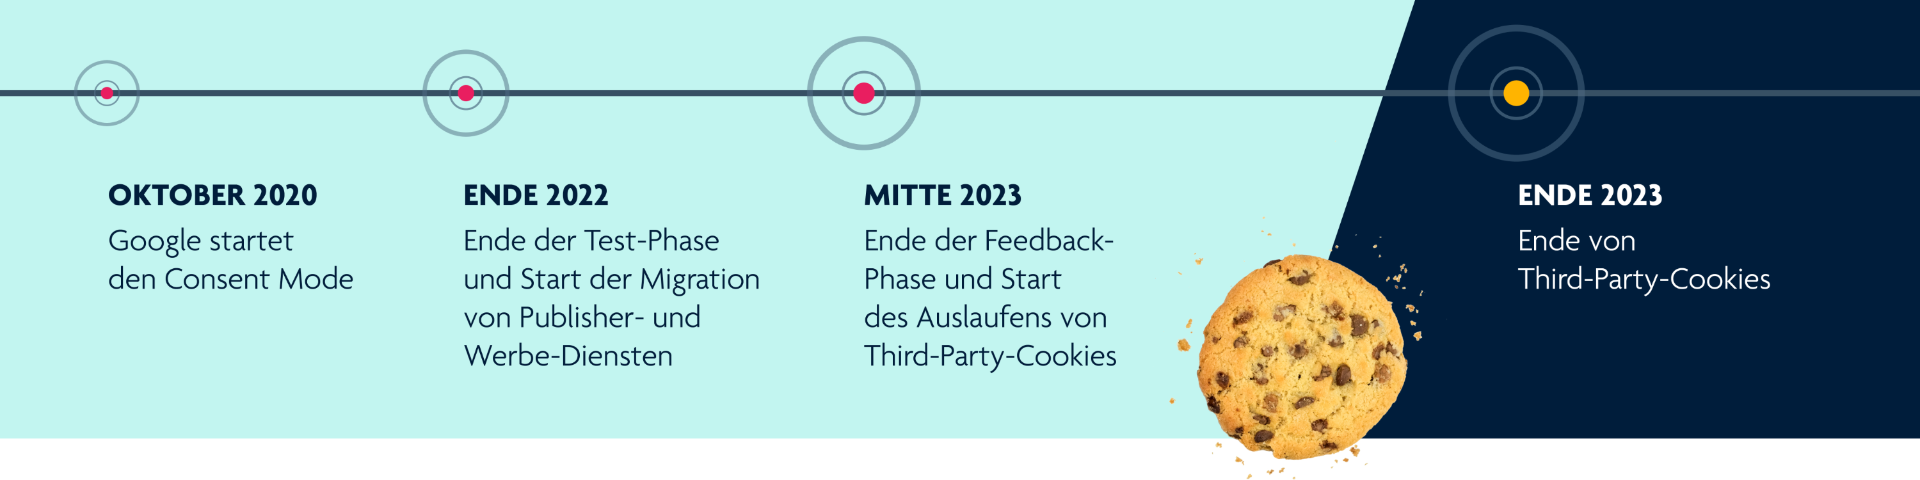 Cookieless-Personalisierungs-Evolution | Google Cookie-Ende 2023